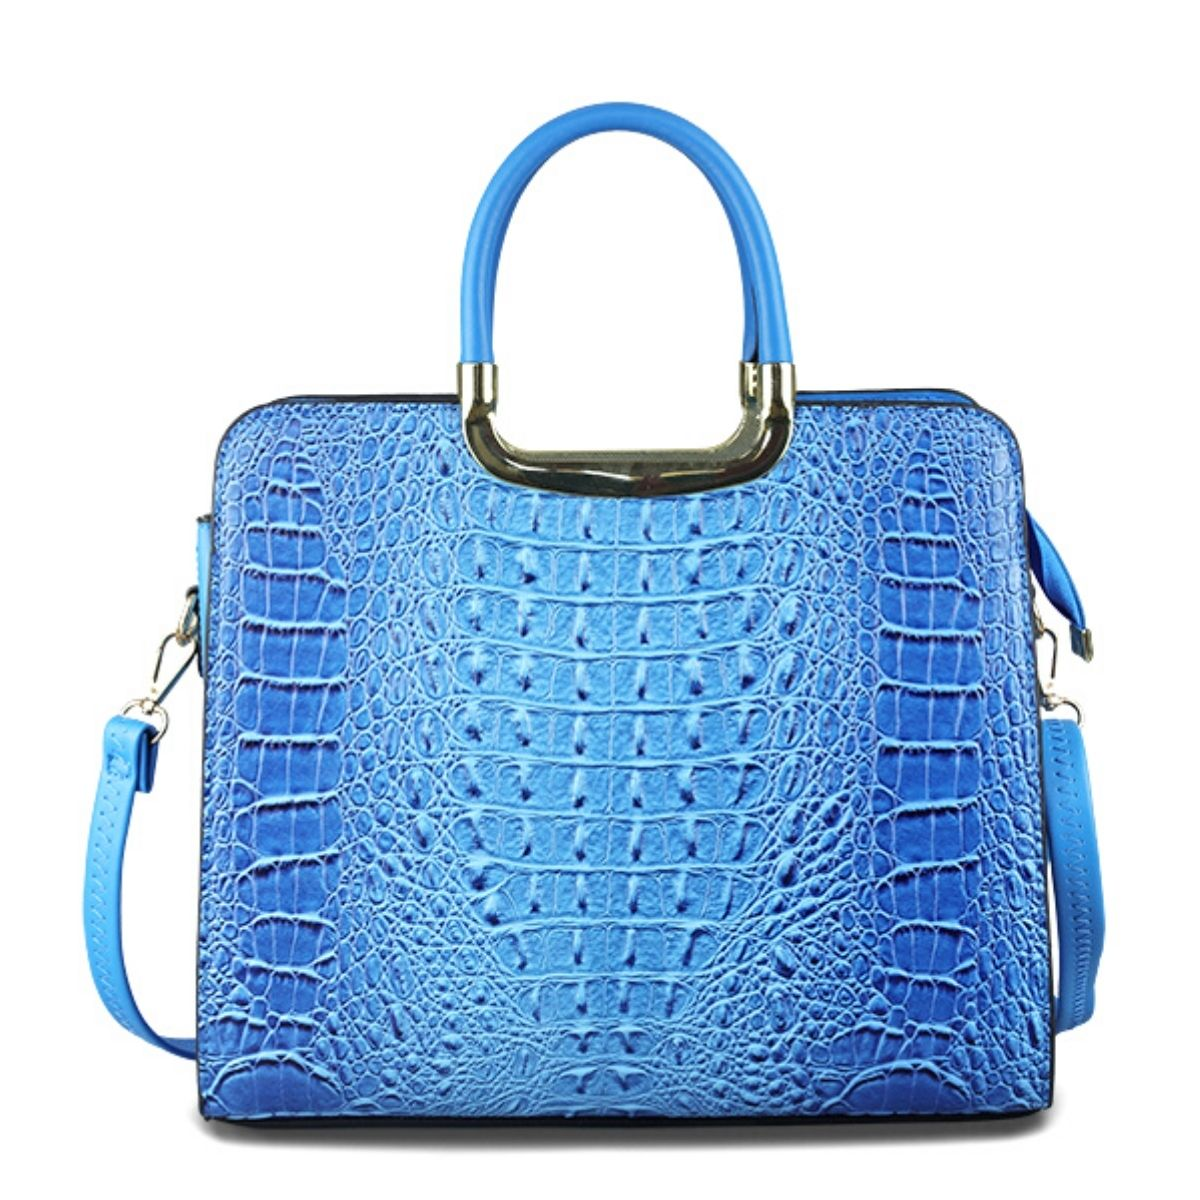 Blue Croc Tote Bag